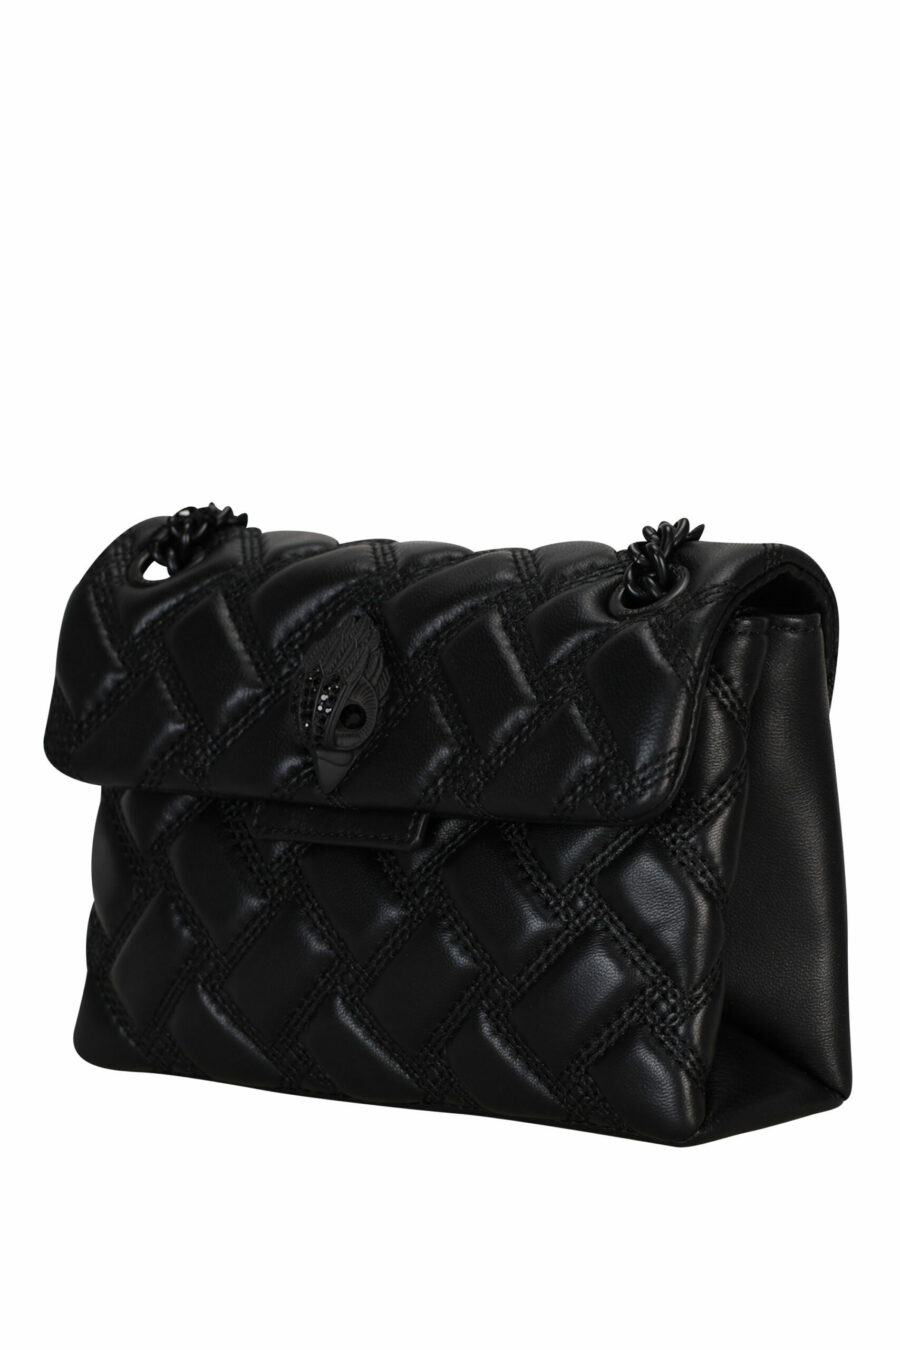 Mini black shoulder bag with diagonal lines and black eagle logo with black cristrals - 5020413709135 1 scaled